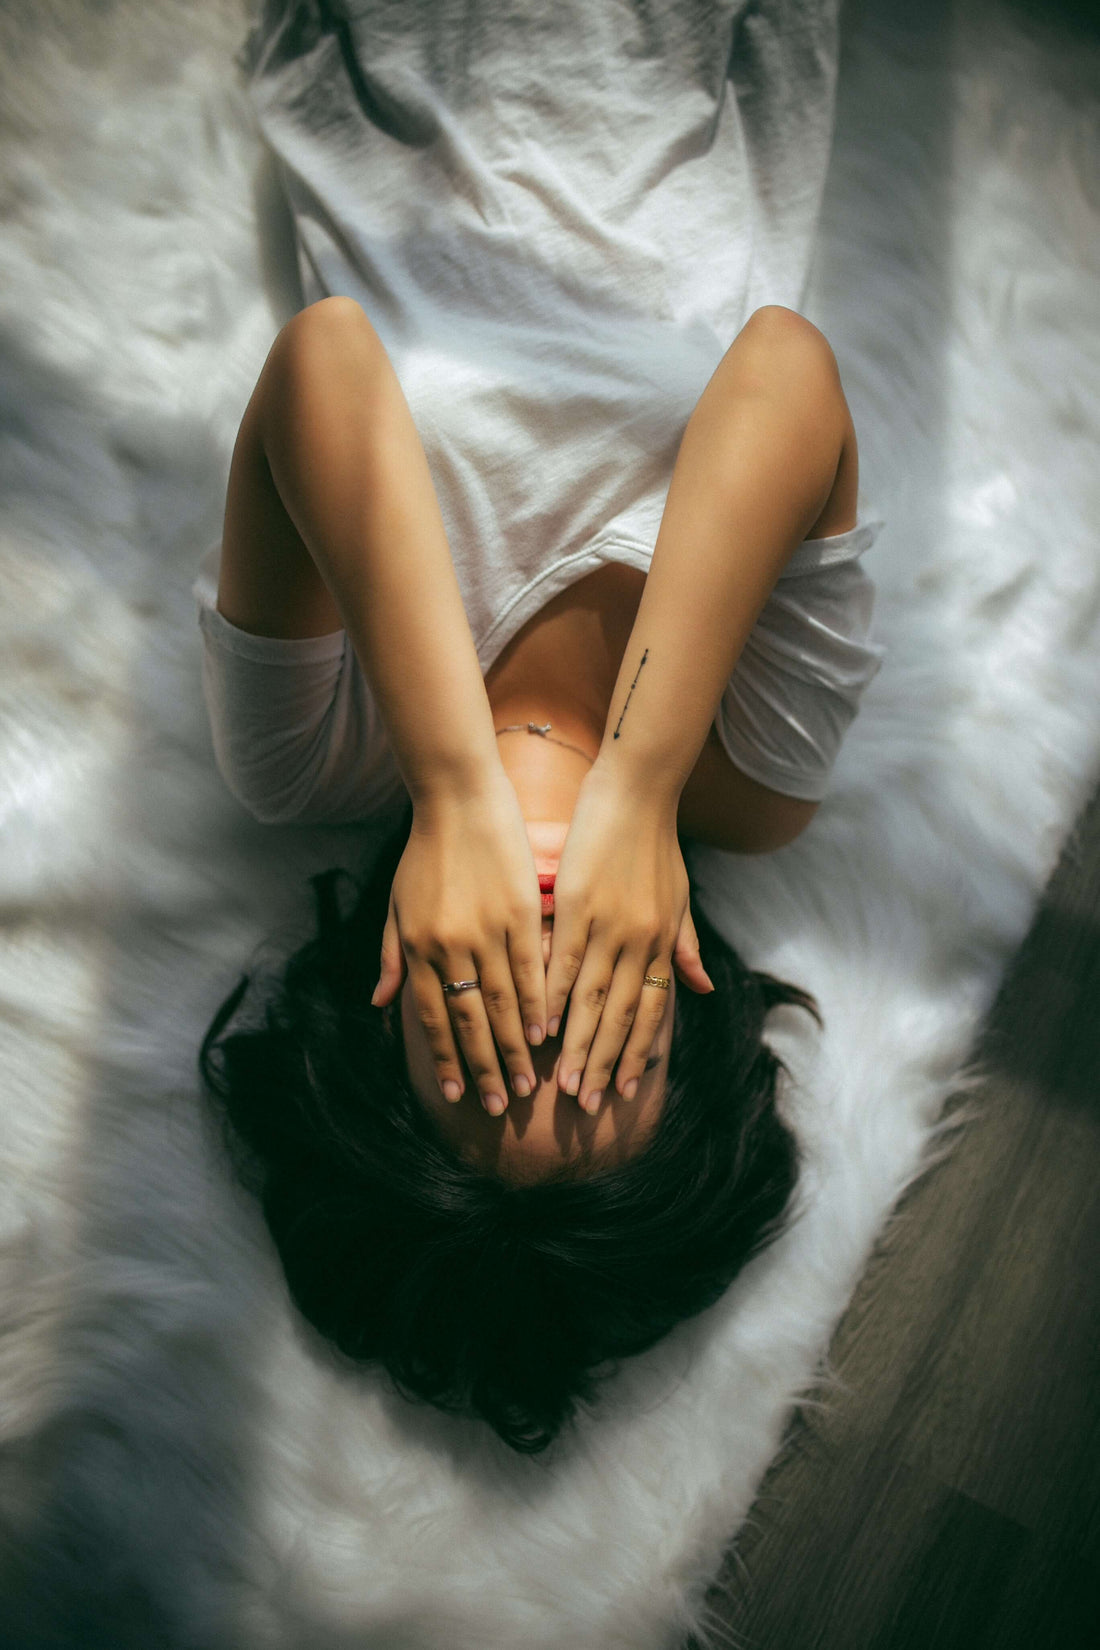 Femme souffrant de troubles menstruels